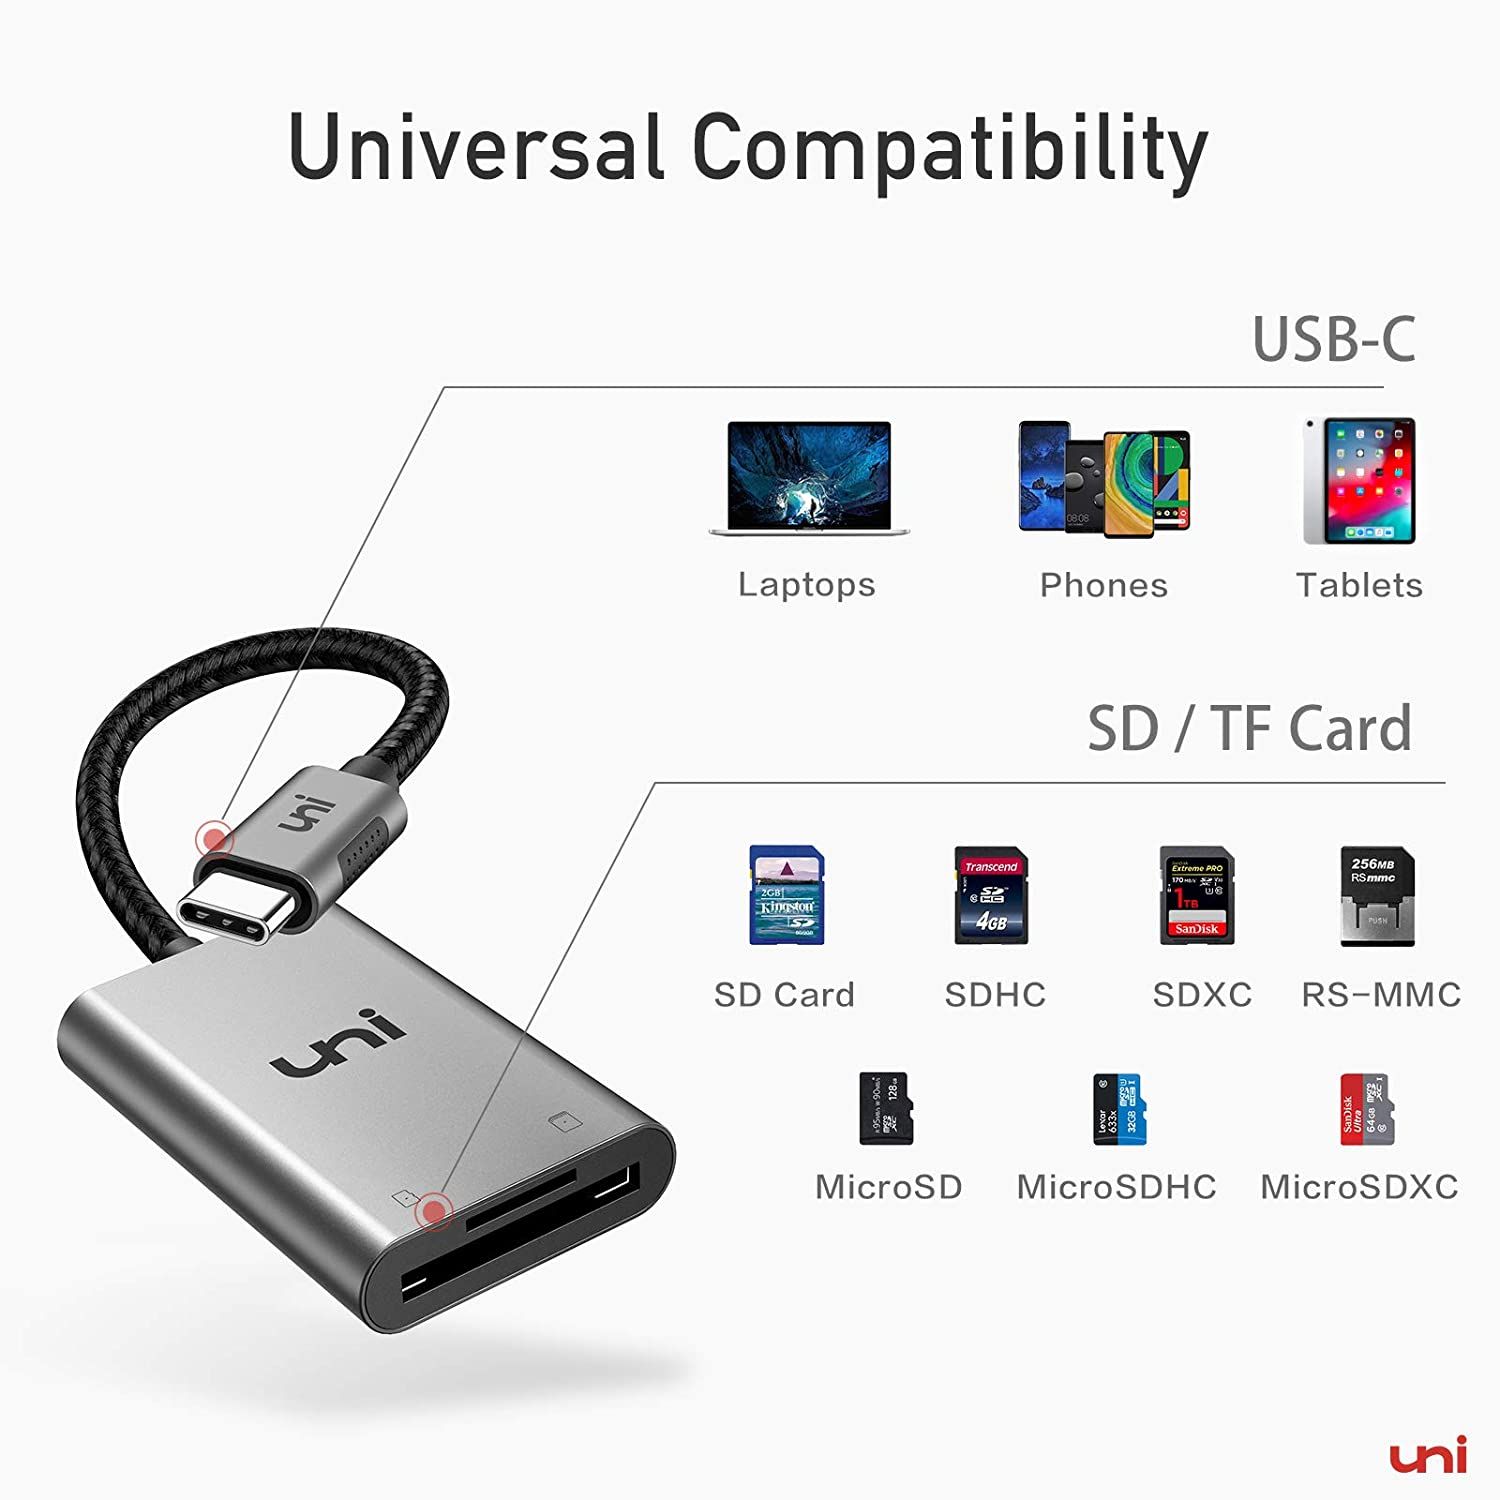 Uni USB-C SD Card Reader card support